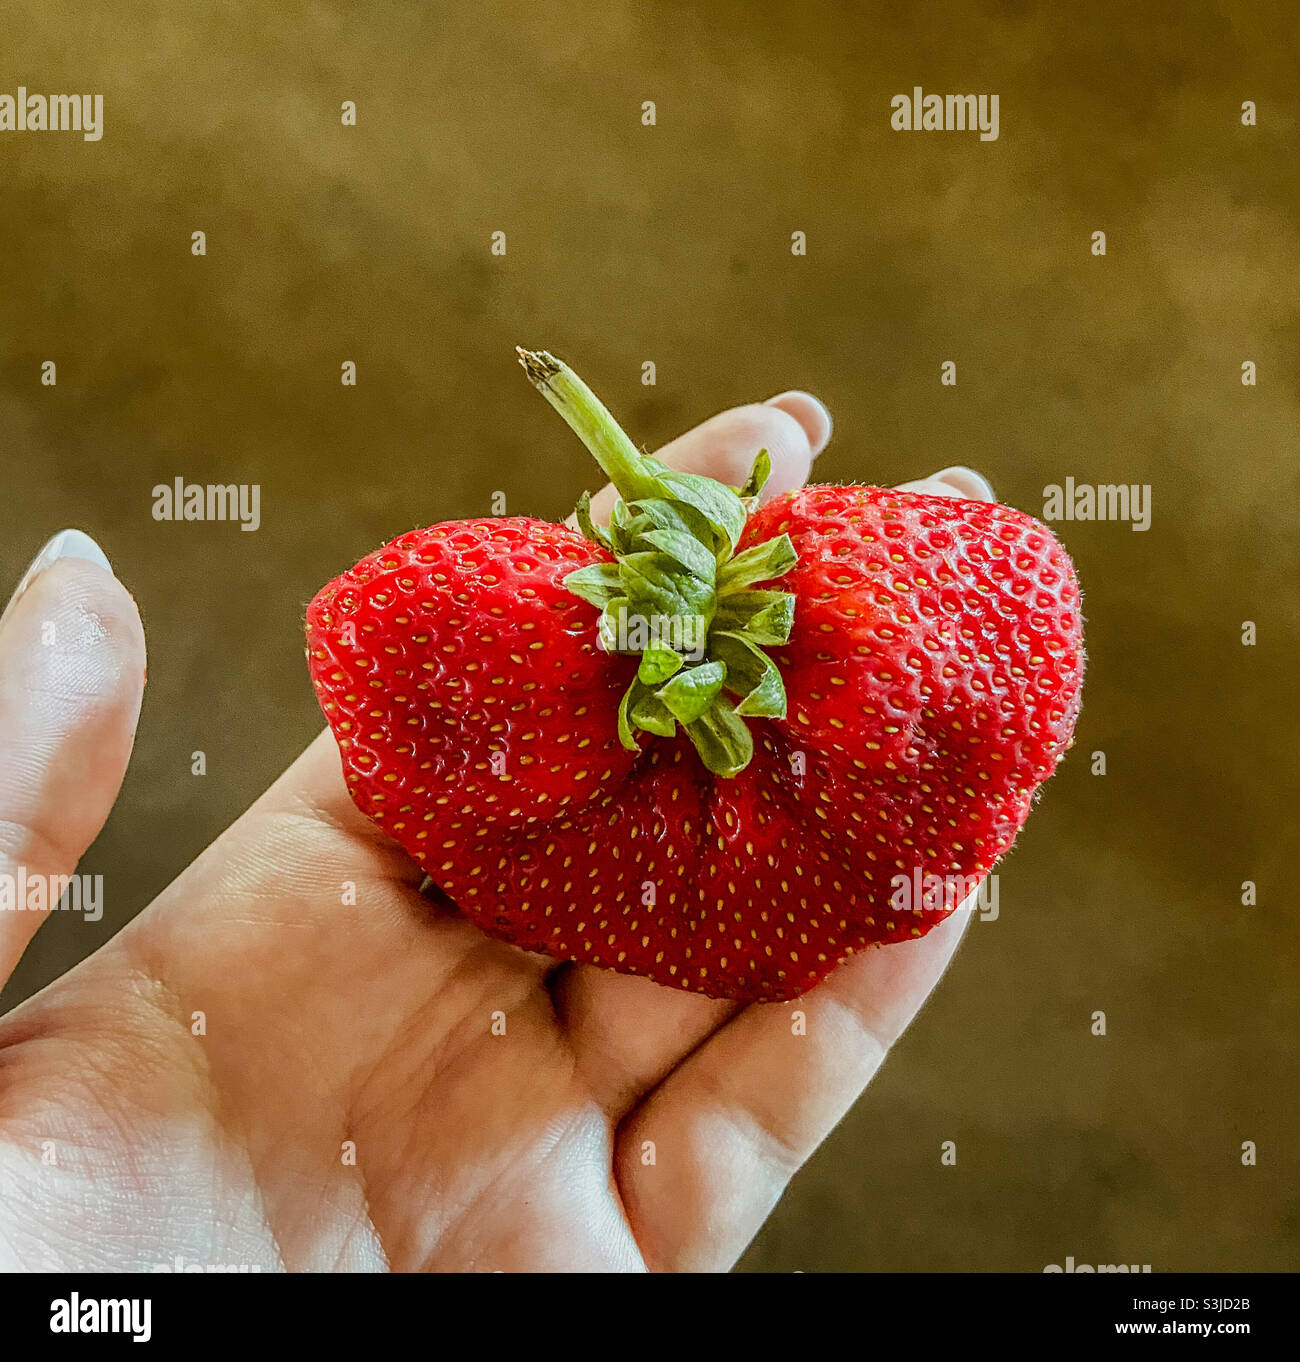 Large strawberry on hand Stock Photo